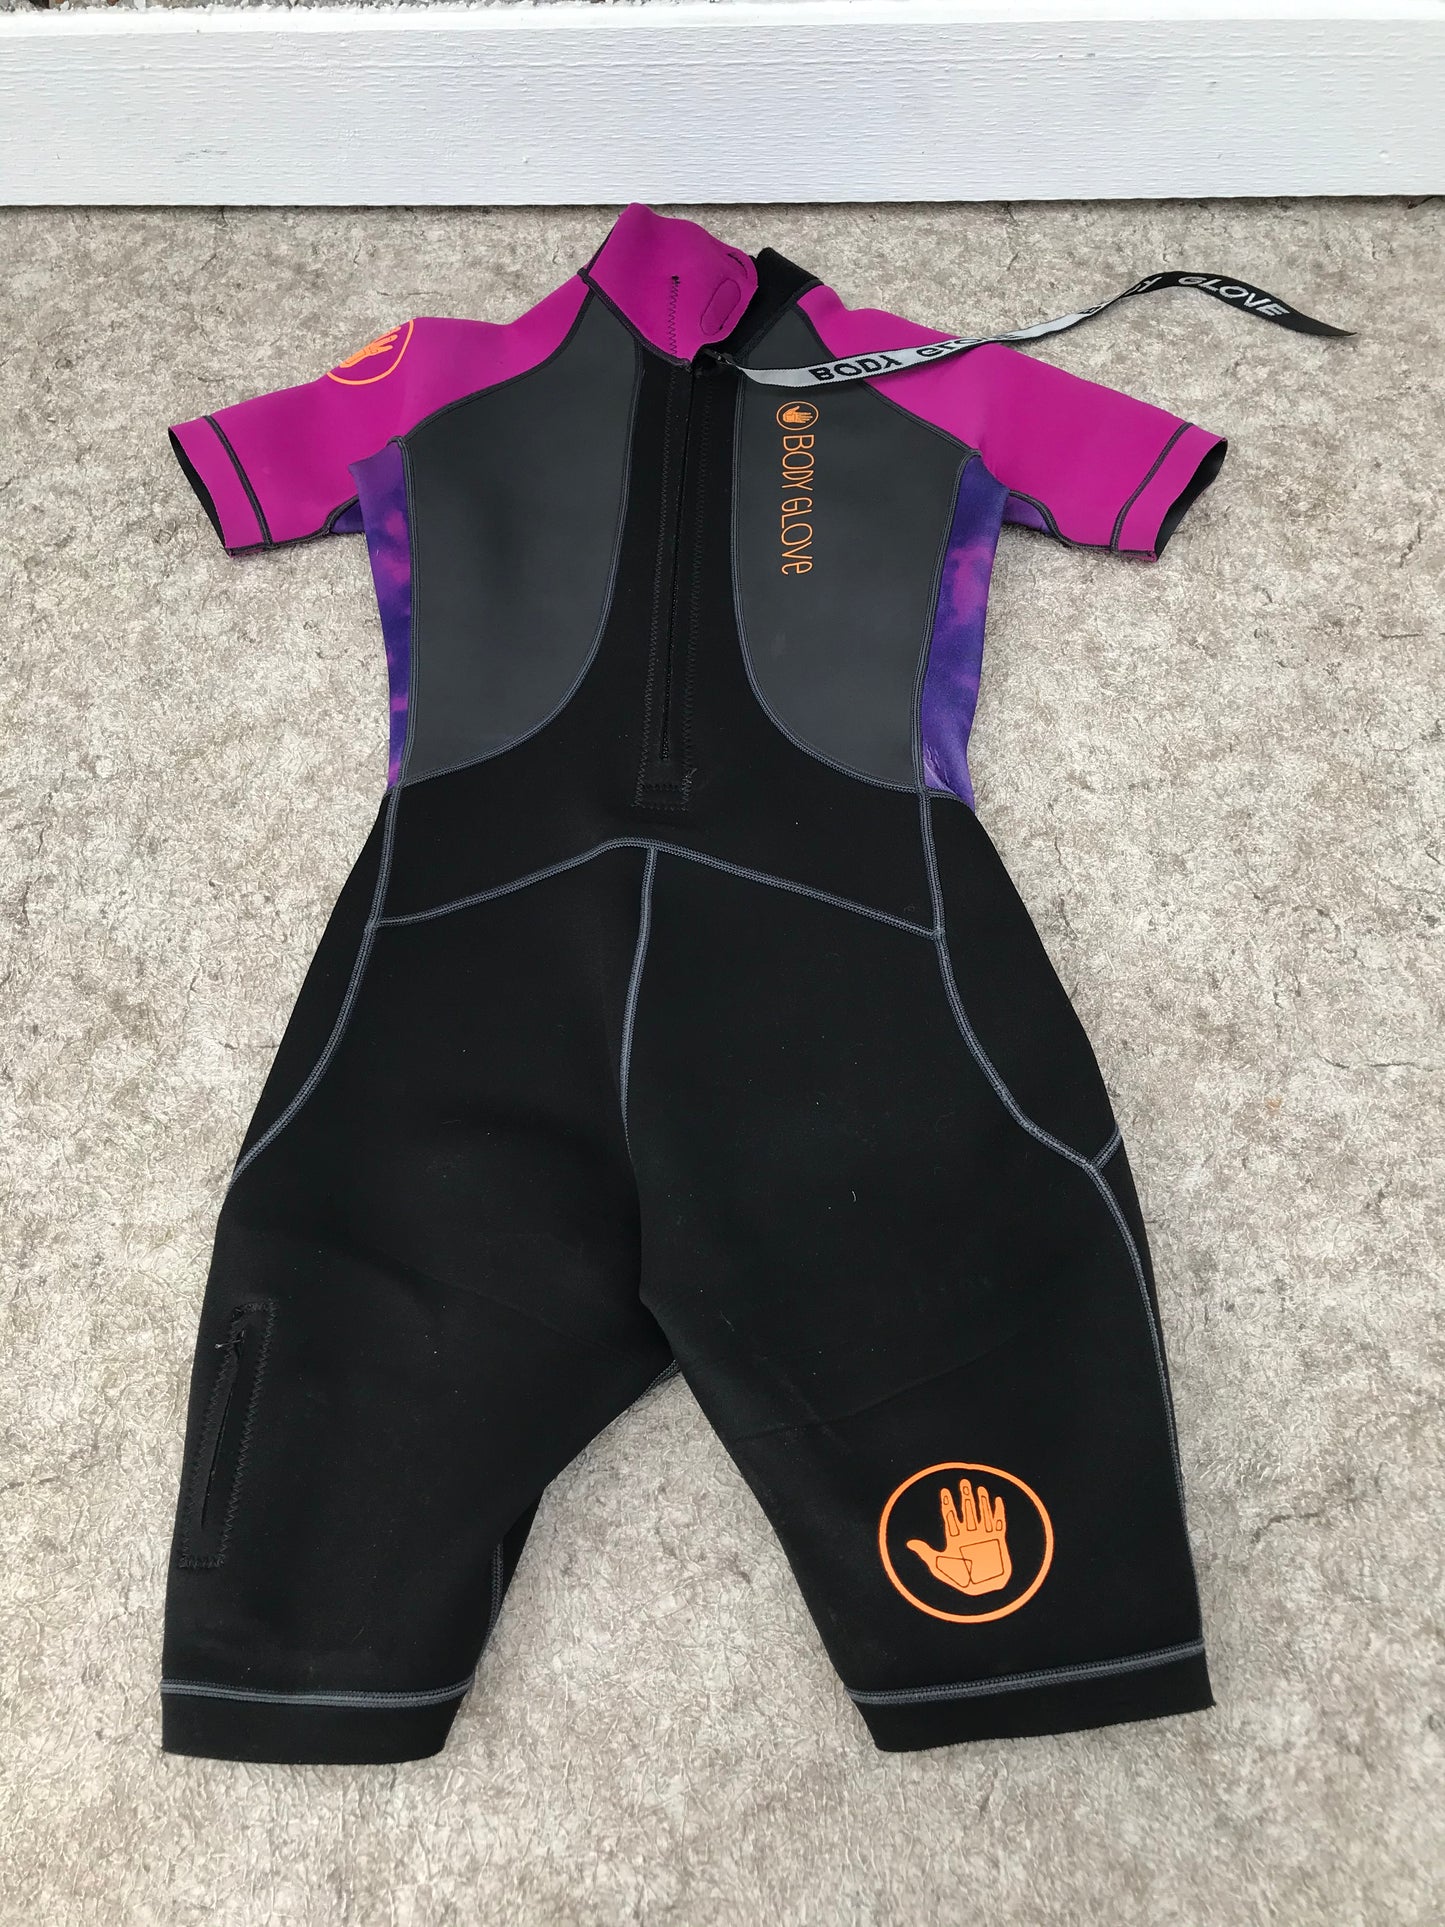 Wetsuit Ladies Size Large Body Glove Tie Dye Dive Surf 2-3 mm Neoprene